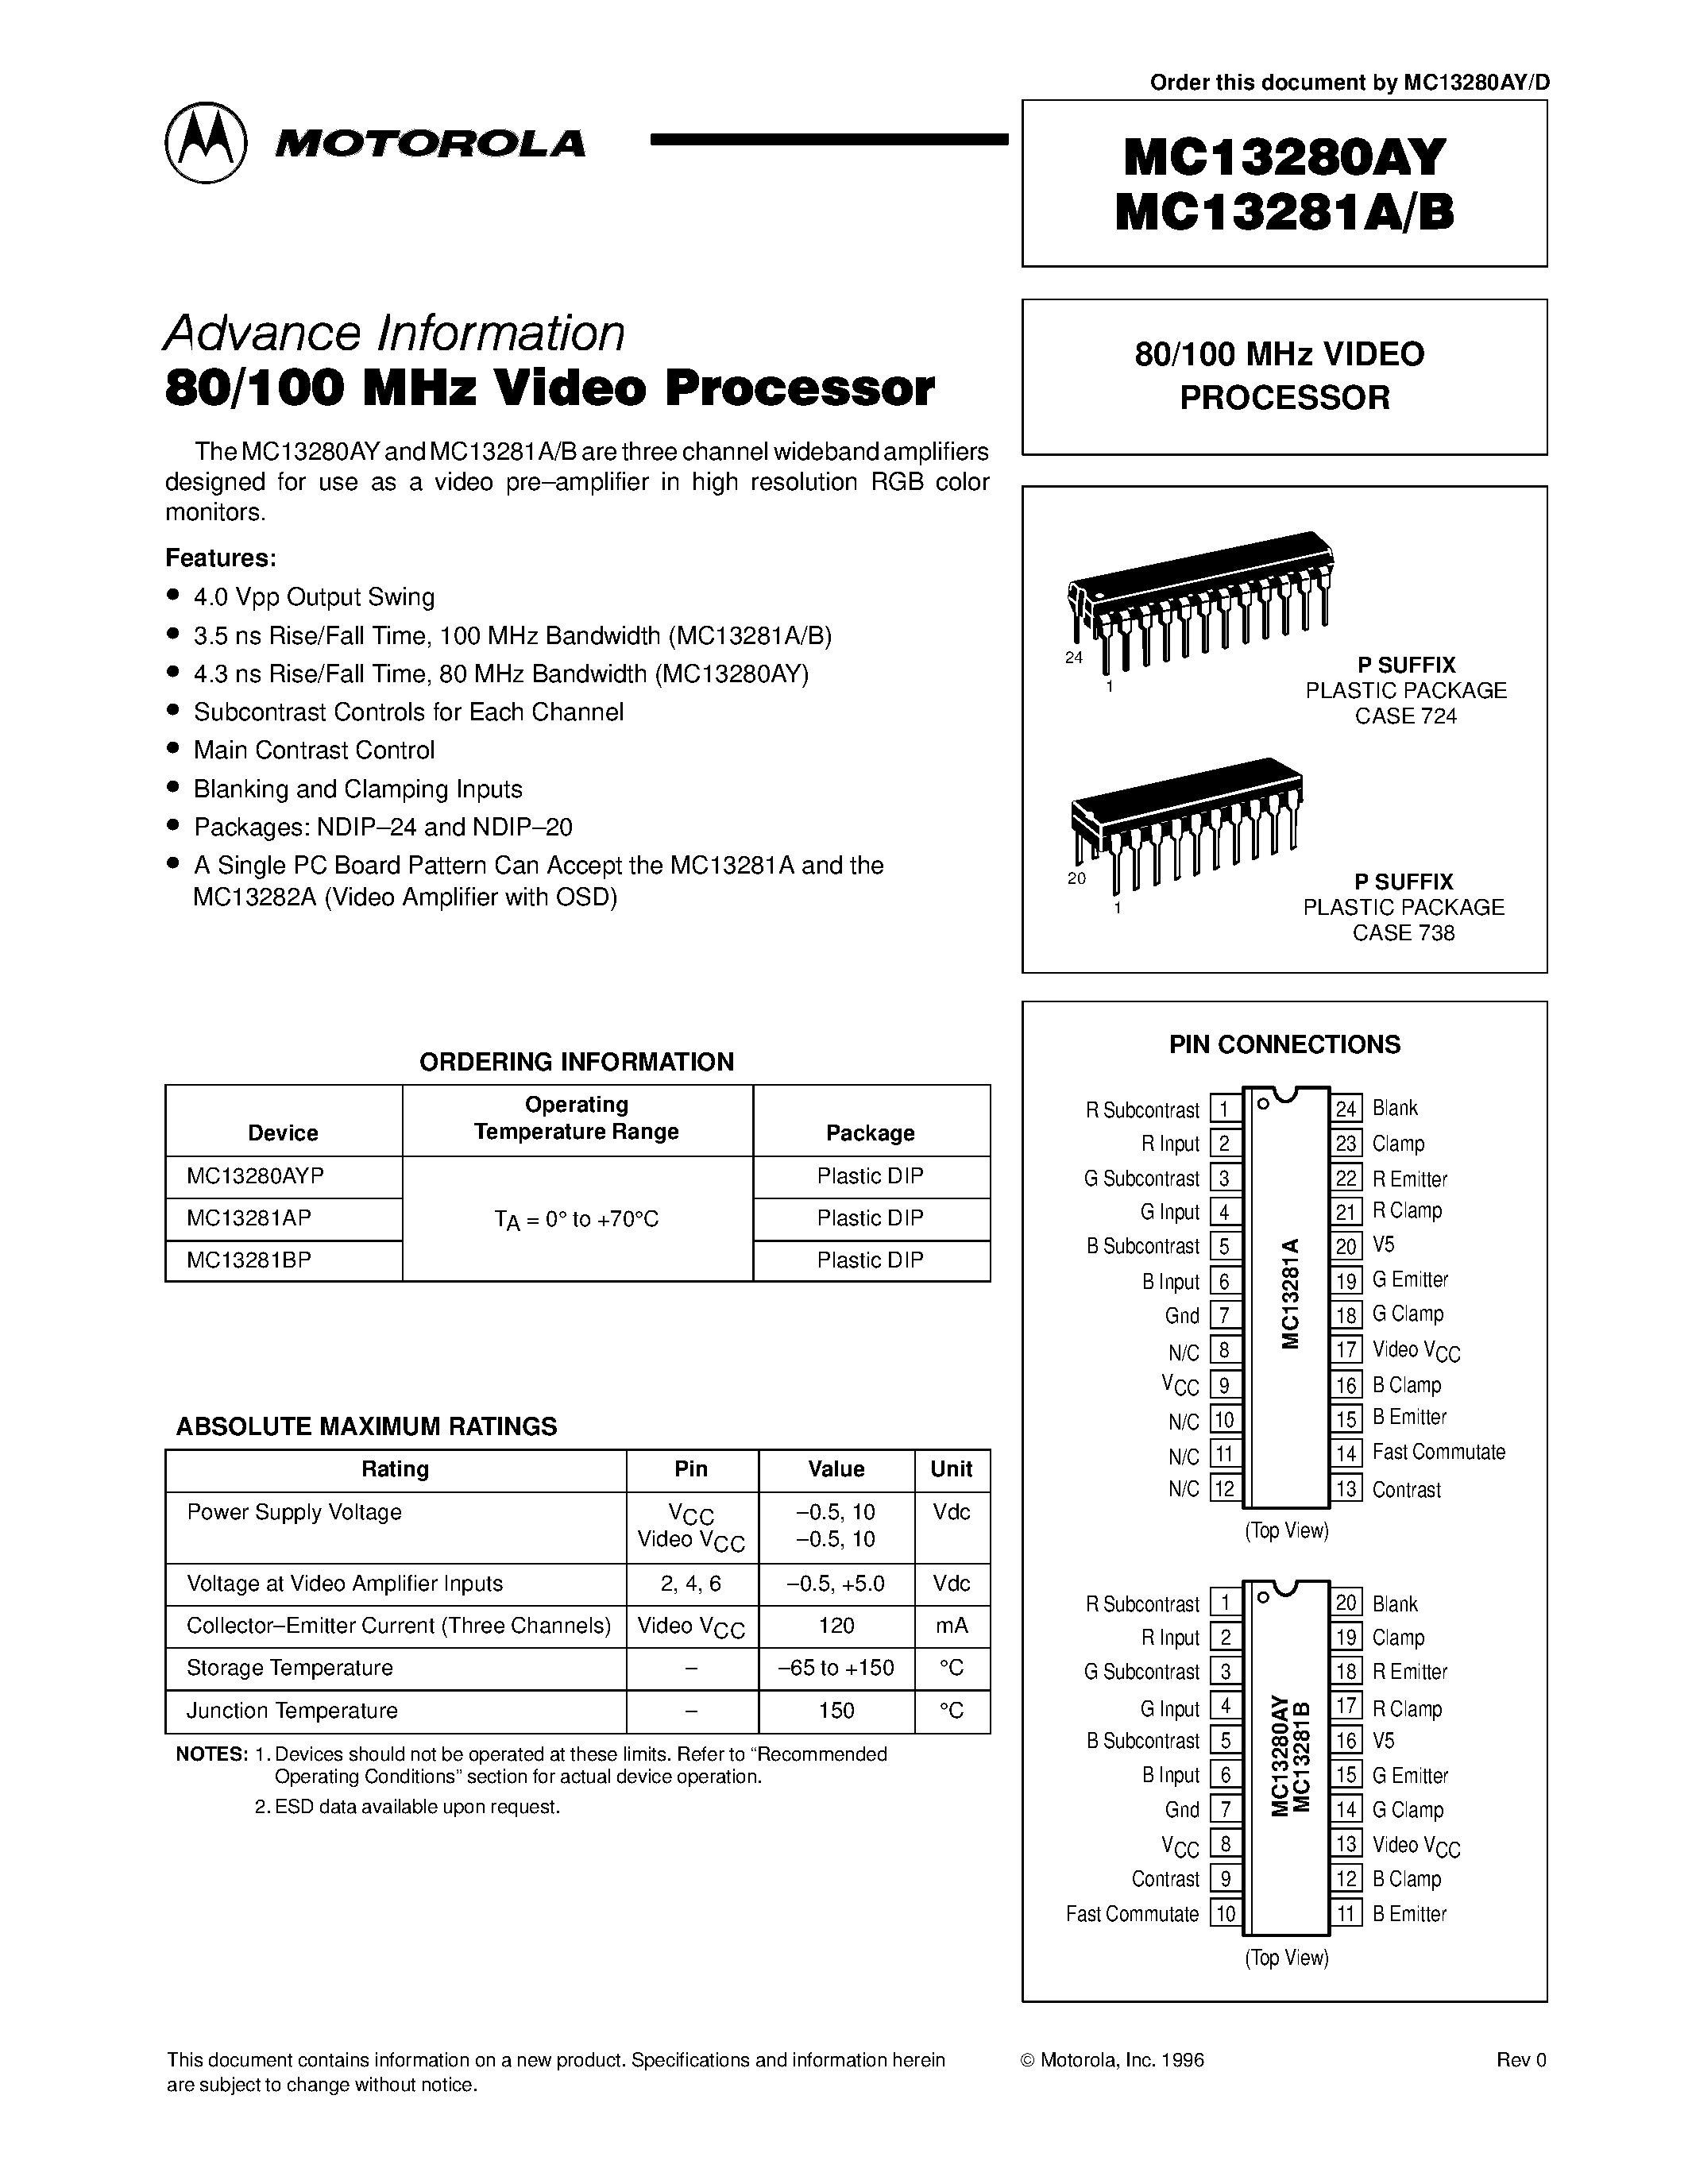 Datasheet MC13280 - 80/100 MHz VIDEO PROCESSOR page 1